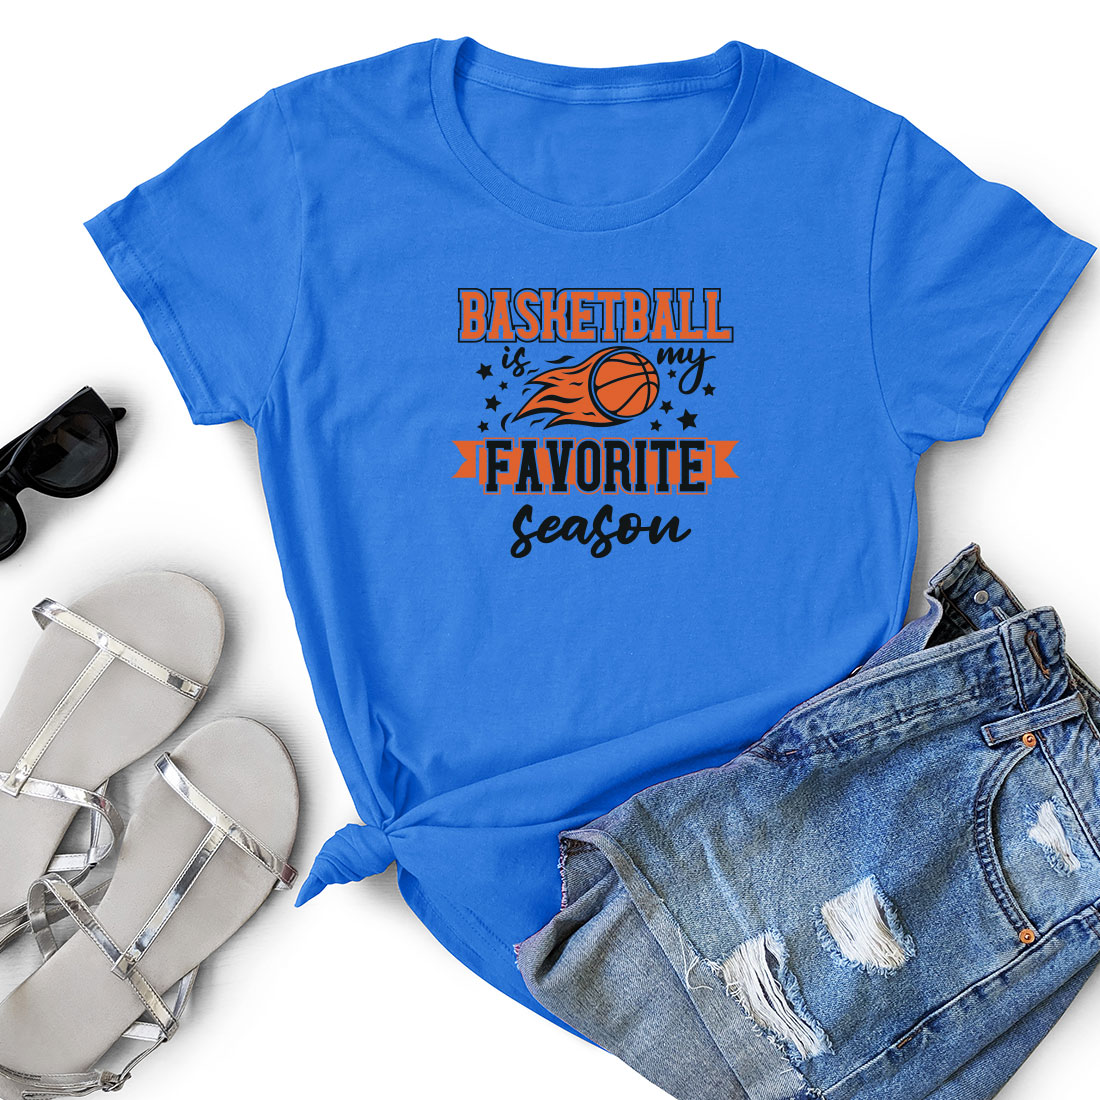 T - shirt that says basketball is my favorite season.